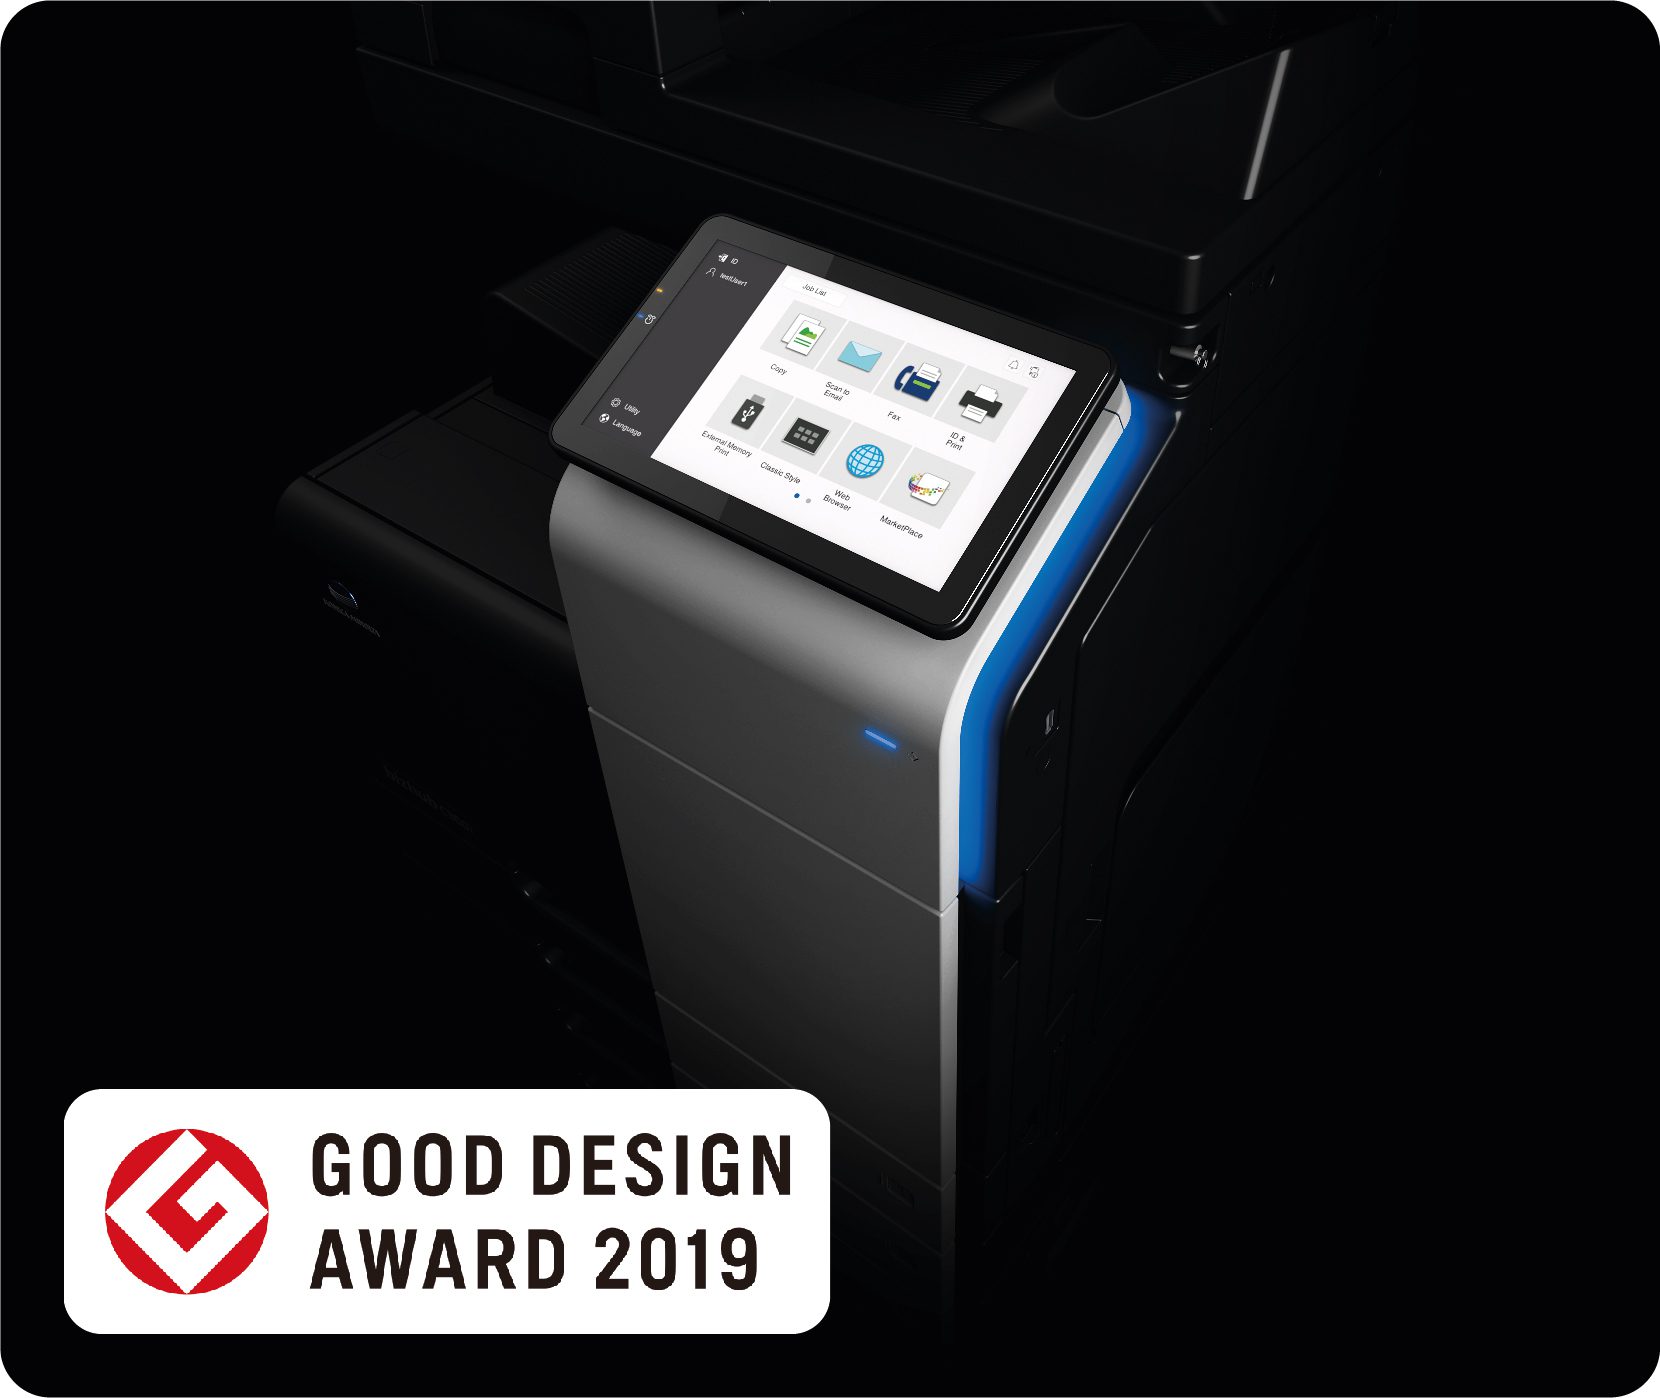 Konica Minolta wins Good Design Award 2019